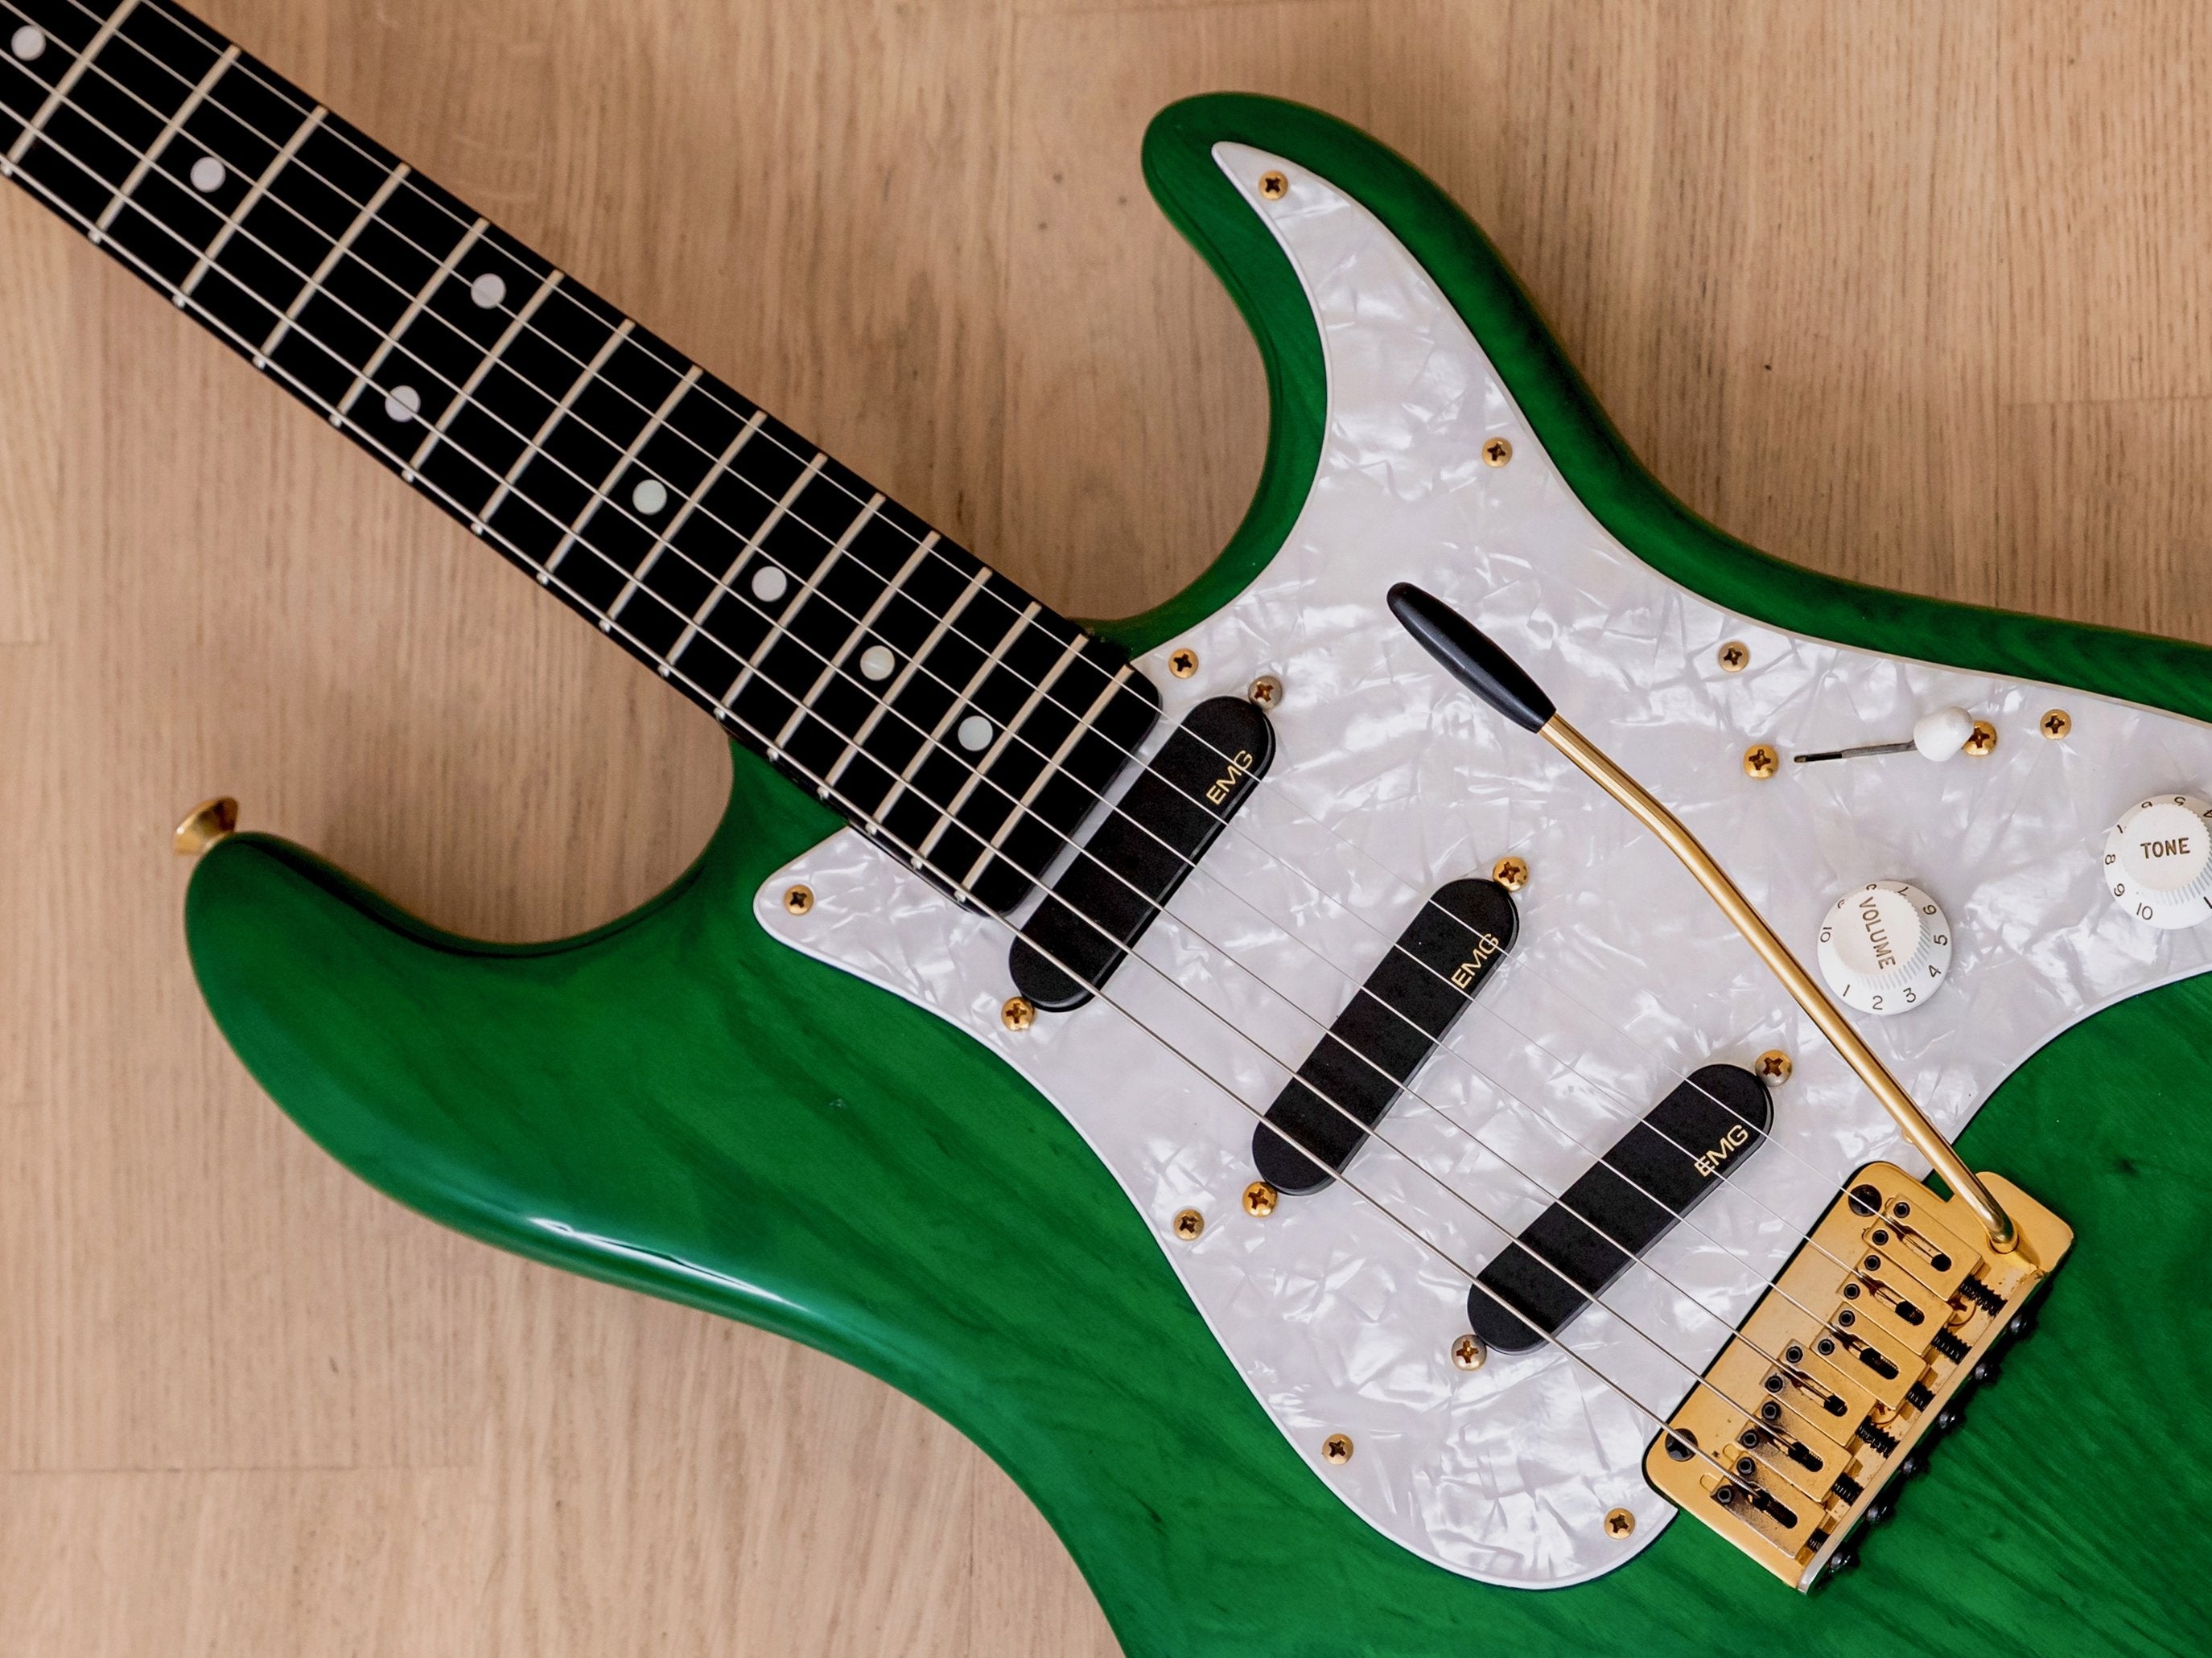 2000s Valley Arts M Series Electric Guitar Transparent Green EMG Pickups, Japan